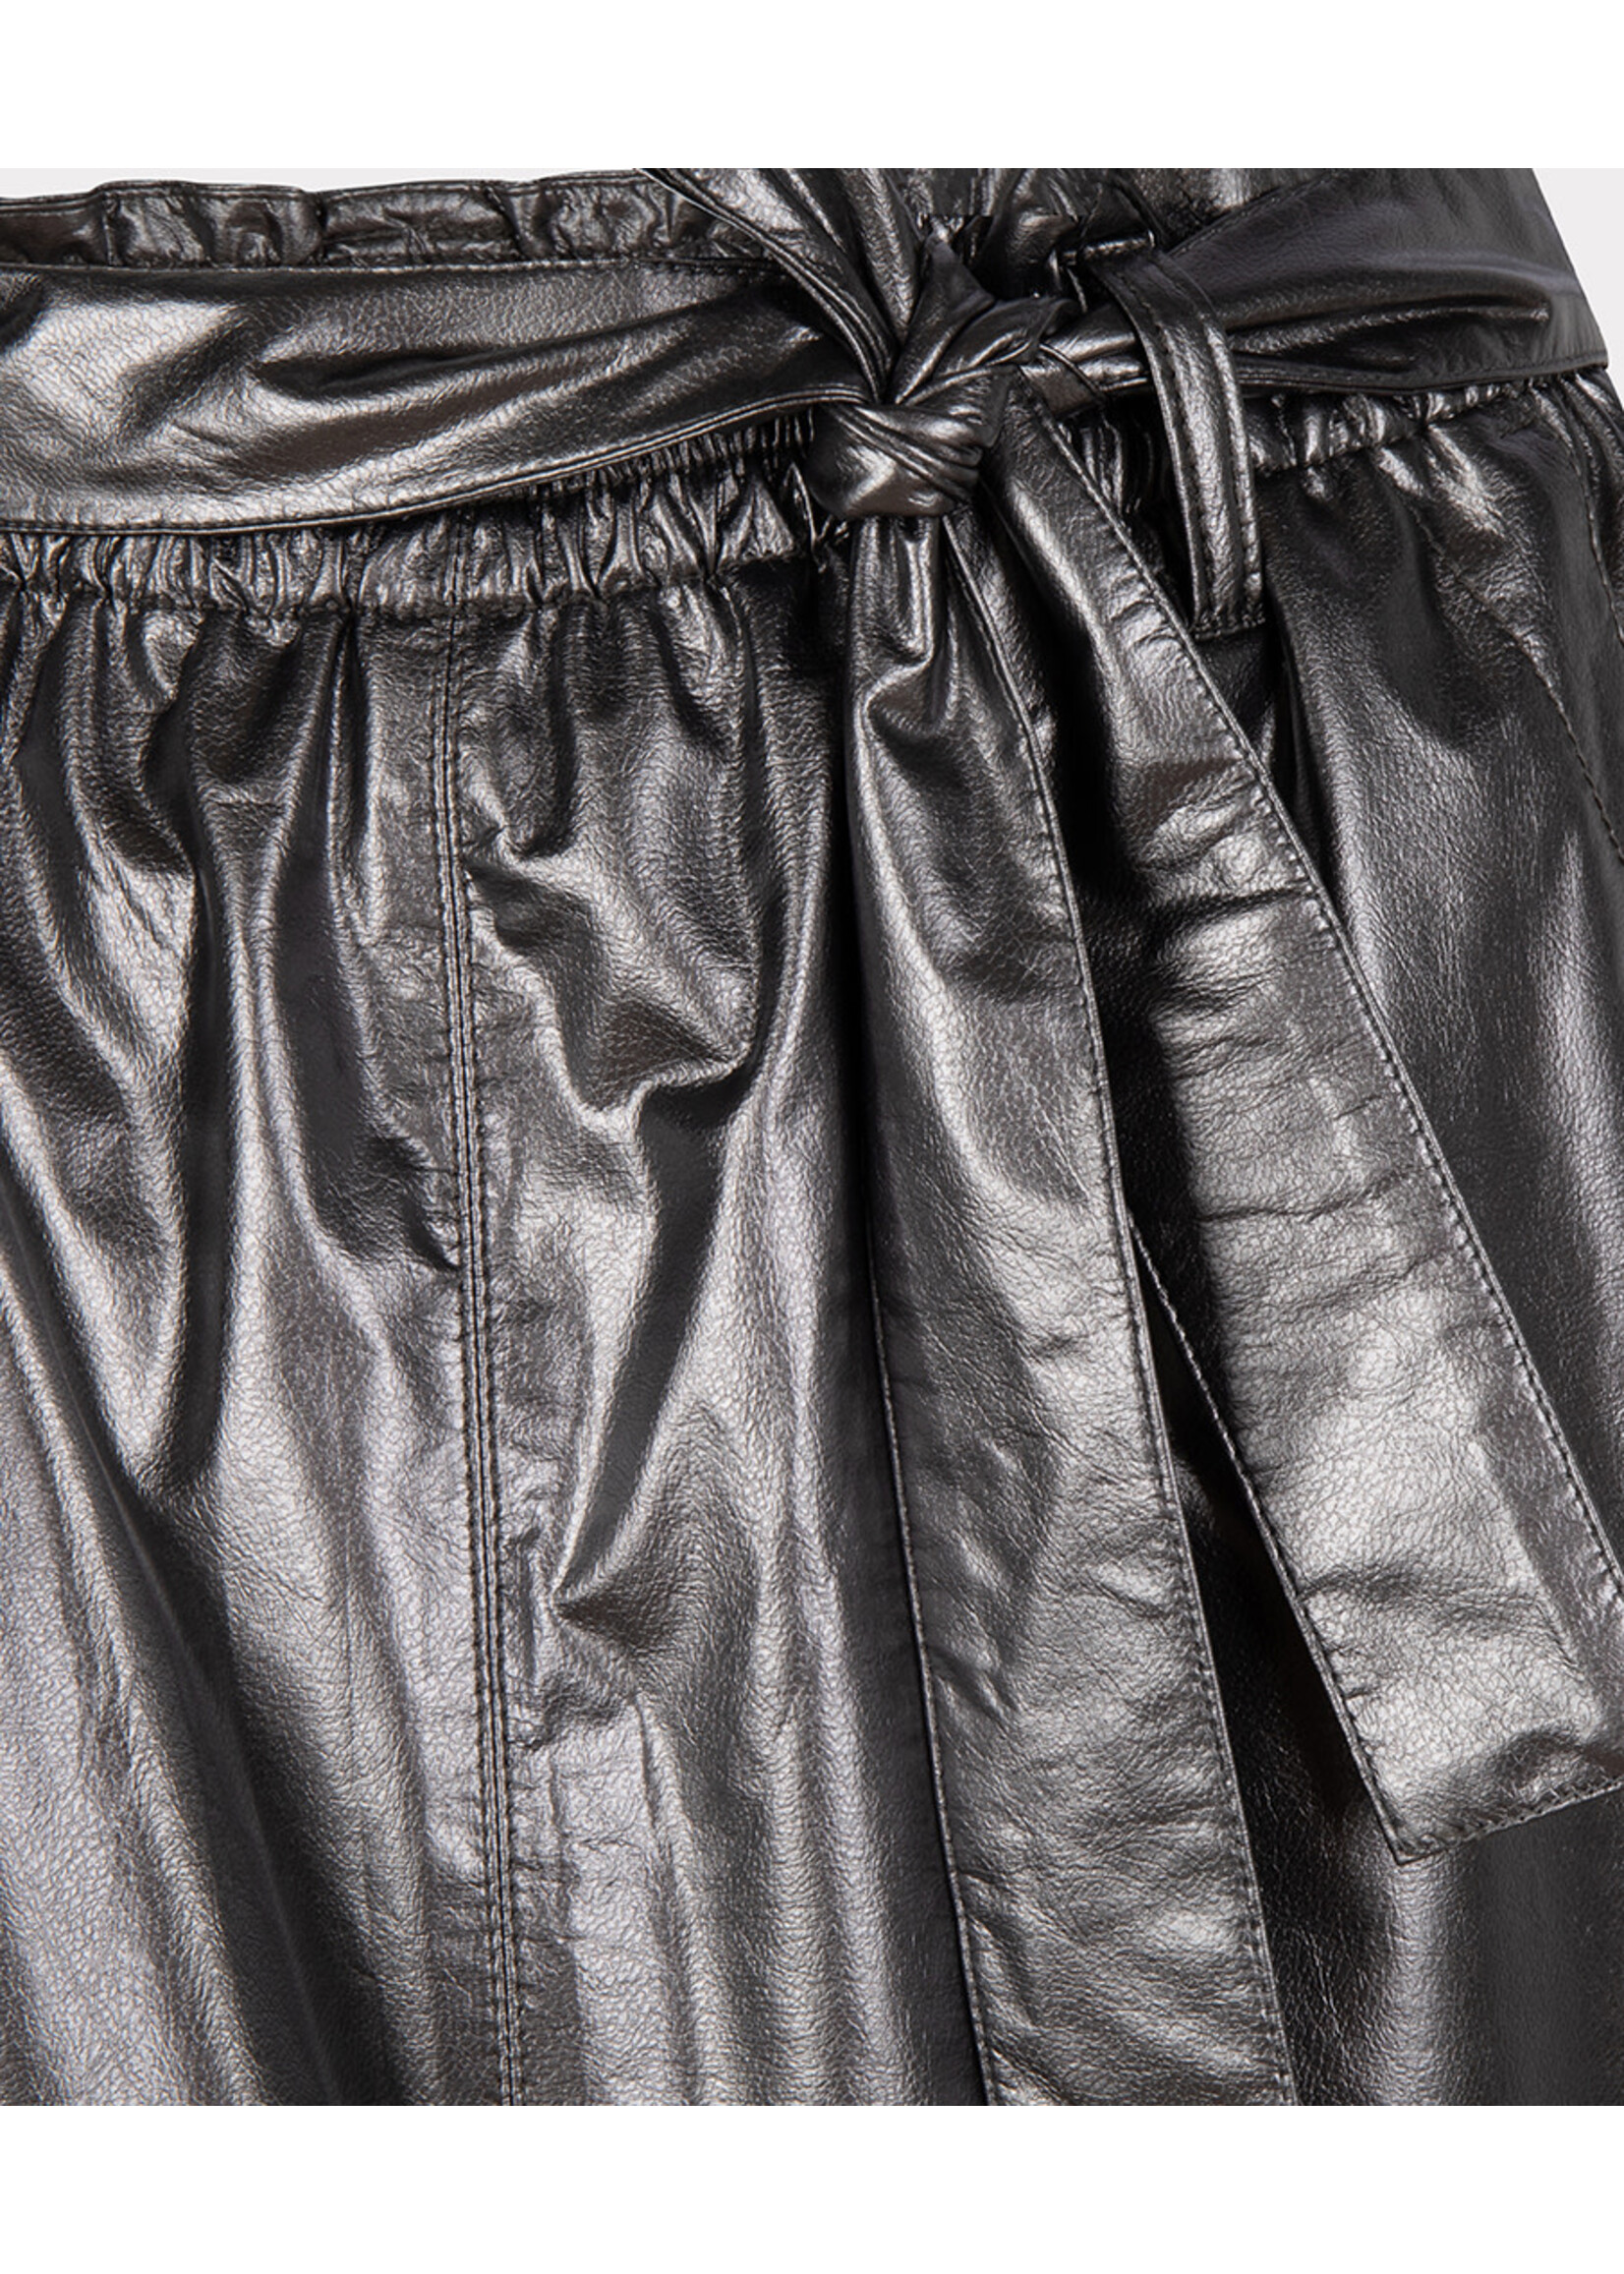 W23.11702 Skirt metallic PU